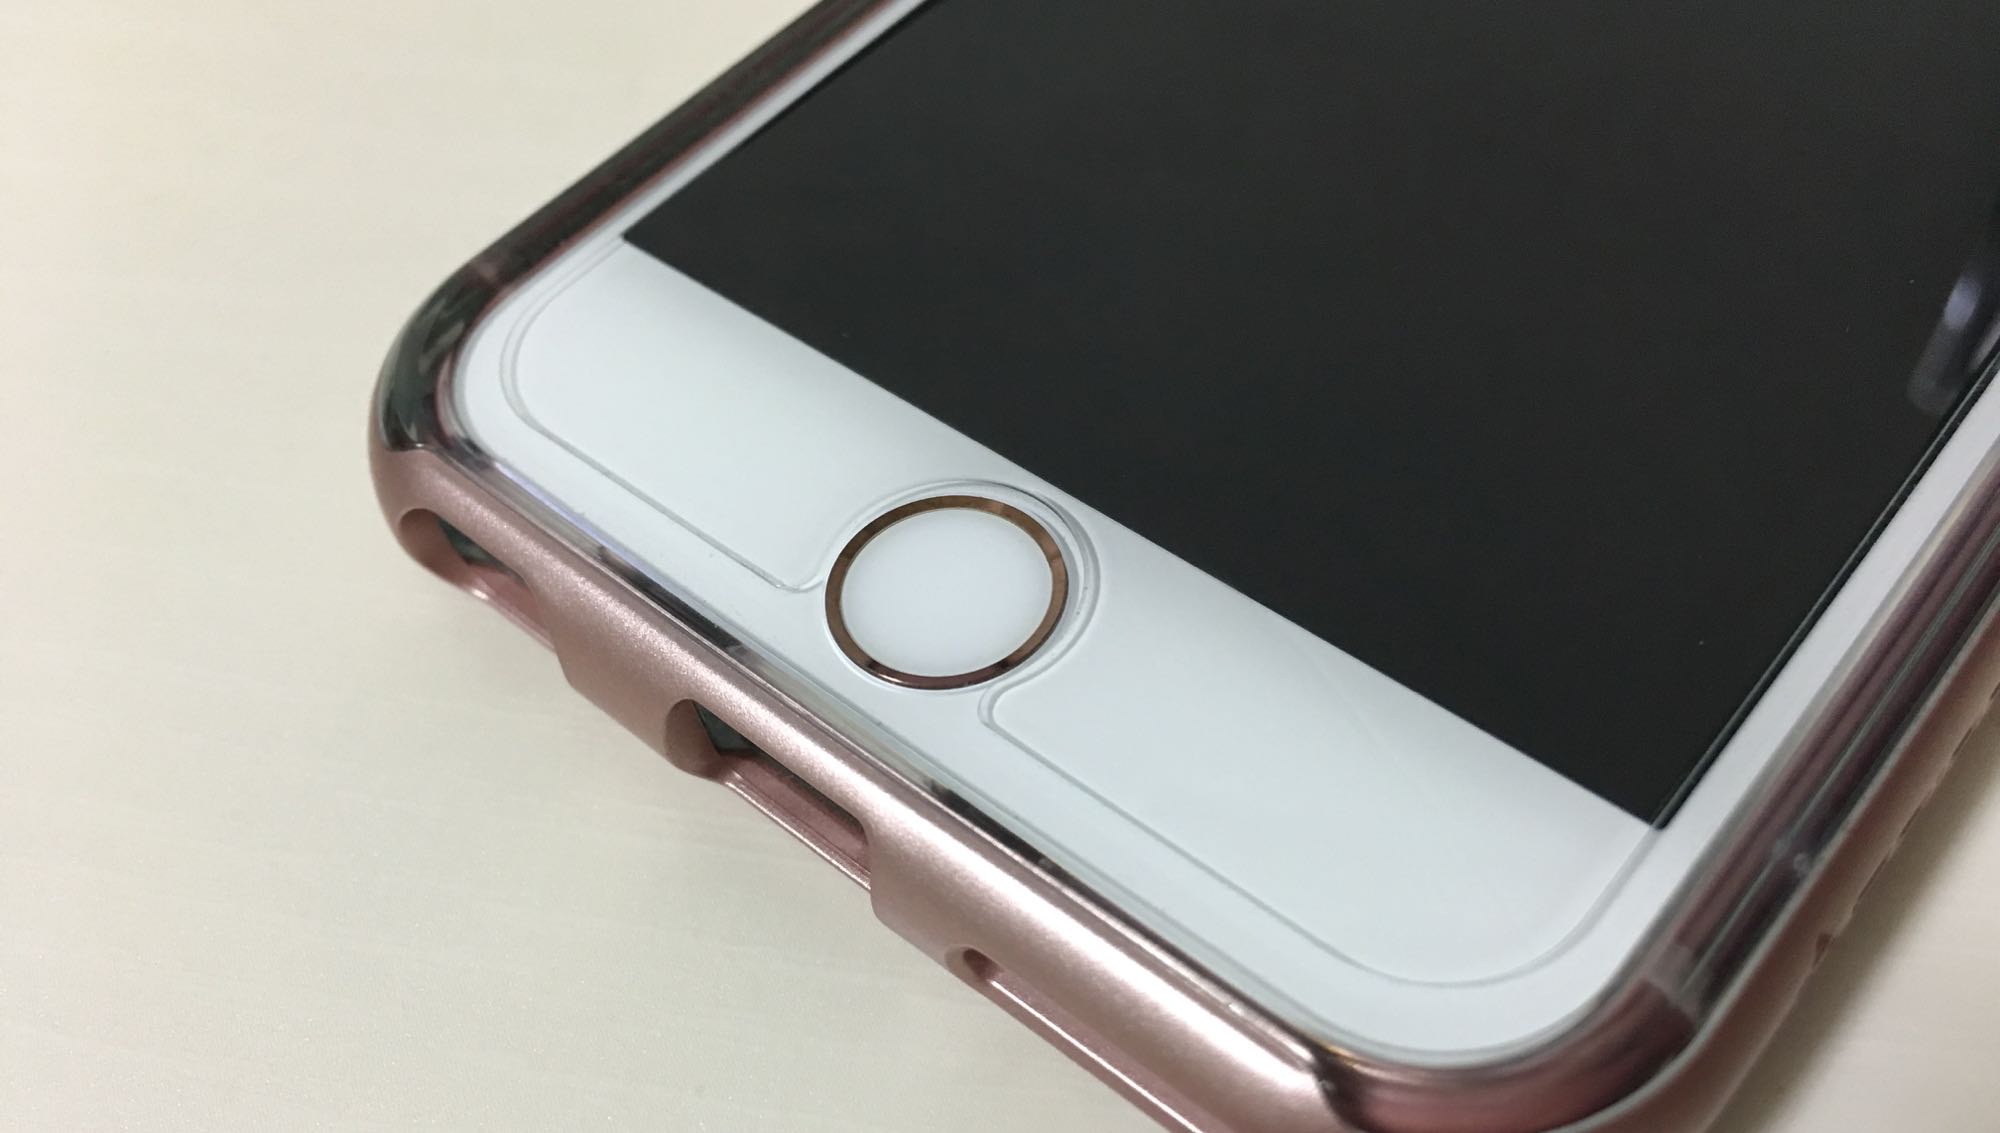 iPhone 6sのホームボタンが異常発熱し画面がブラックアウトする不具合が発生。強制リセットで復活 | ガジェットショット